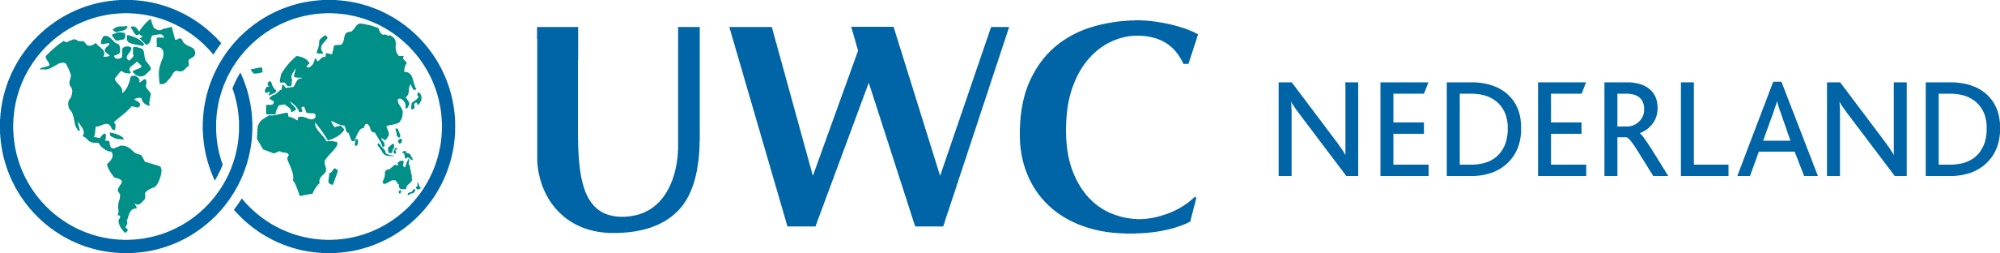 UWC Nederland